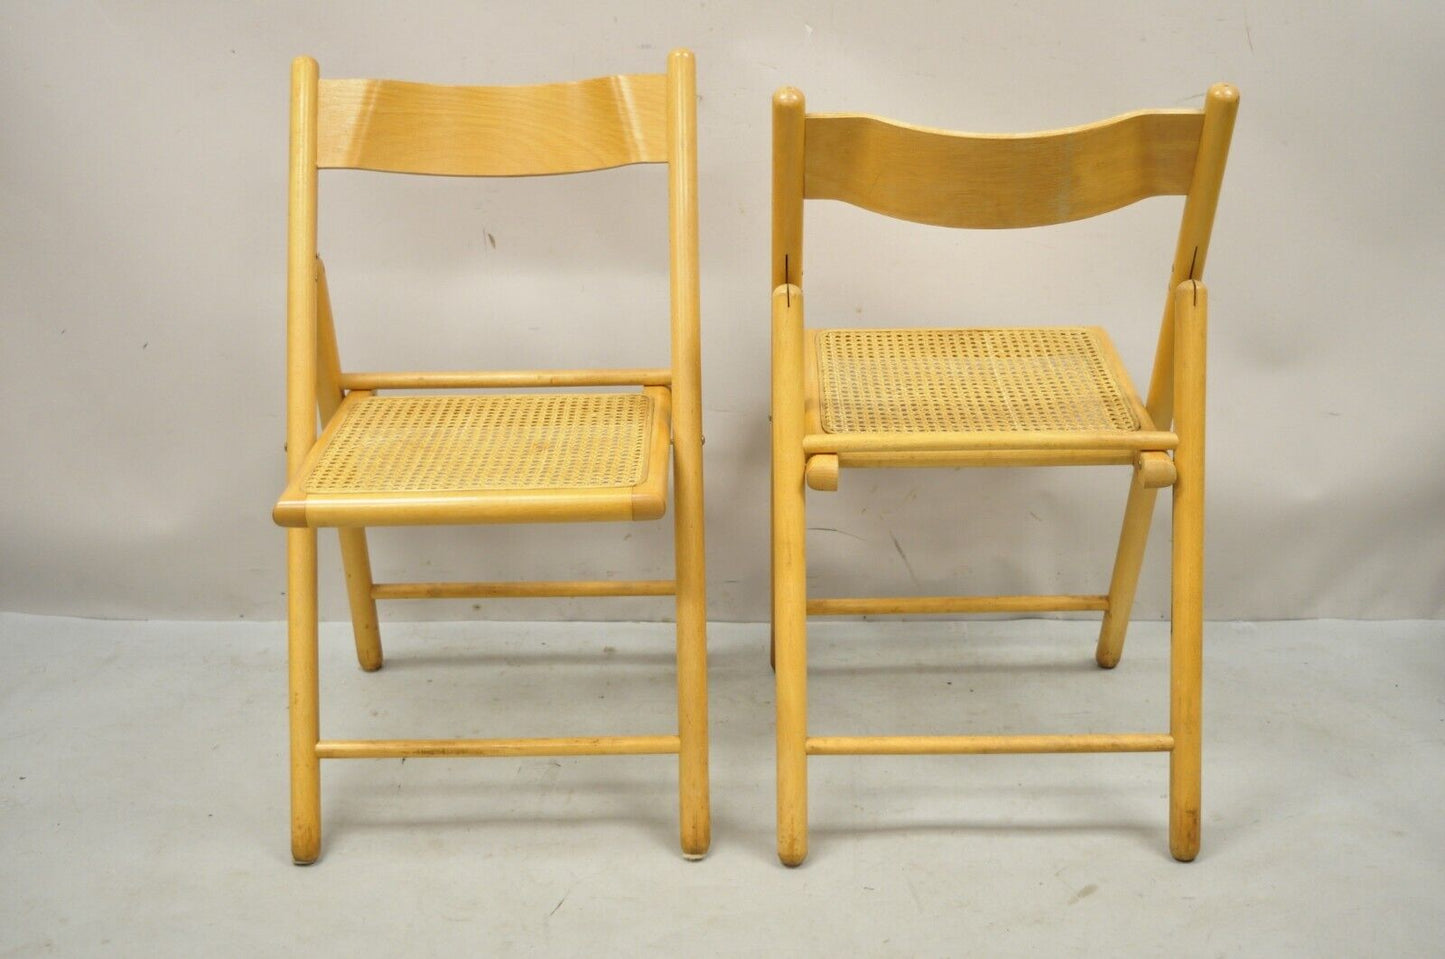 Vintage Habitat England Bentwood Cane Rattan Folding Chairs - a Pair